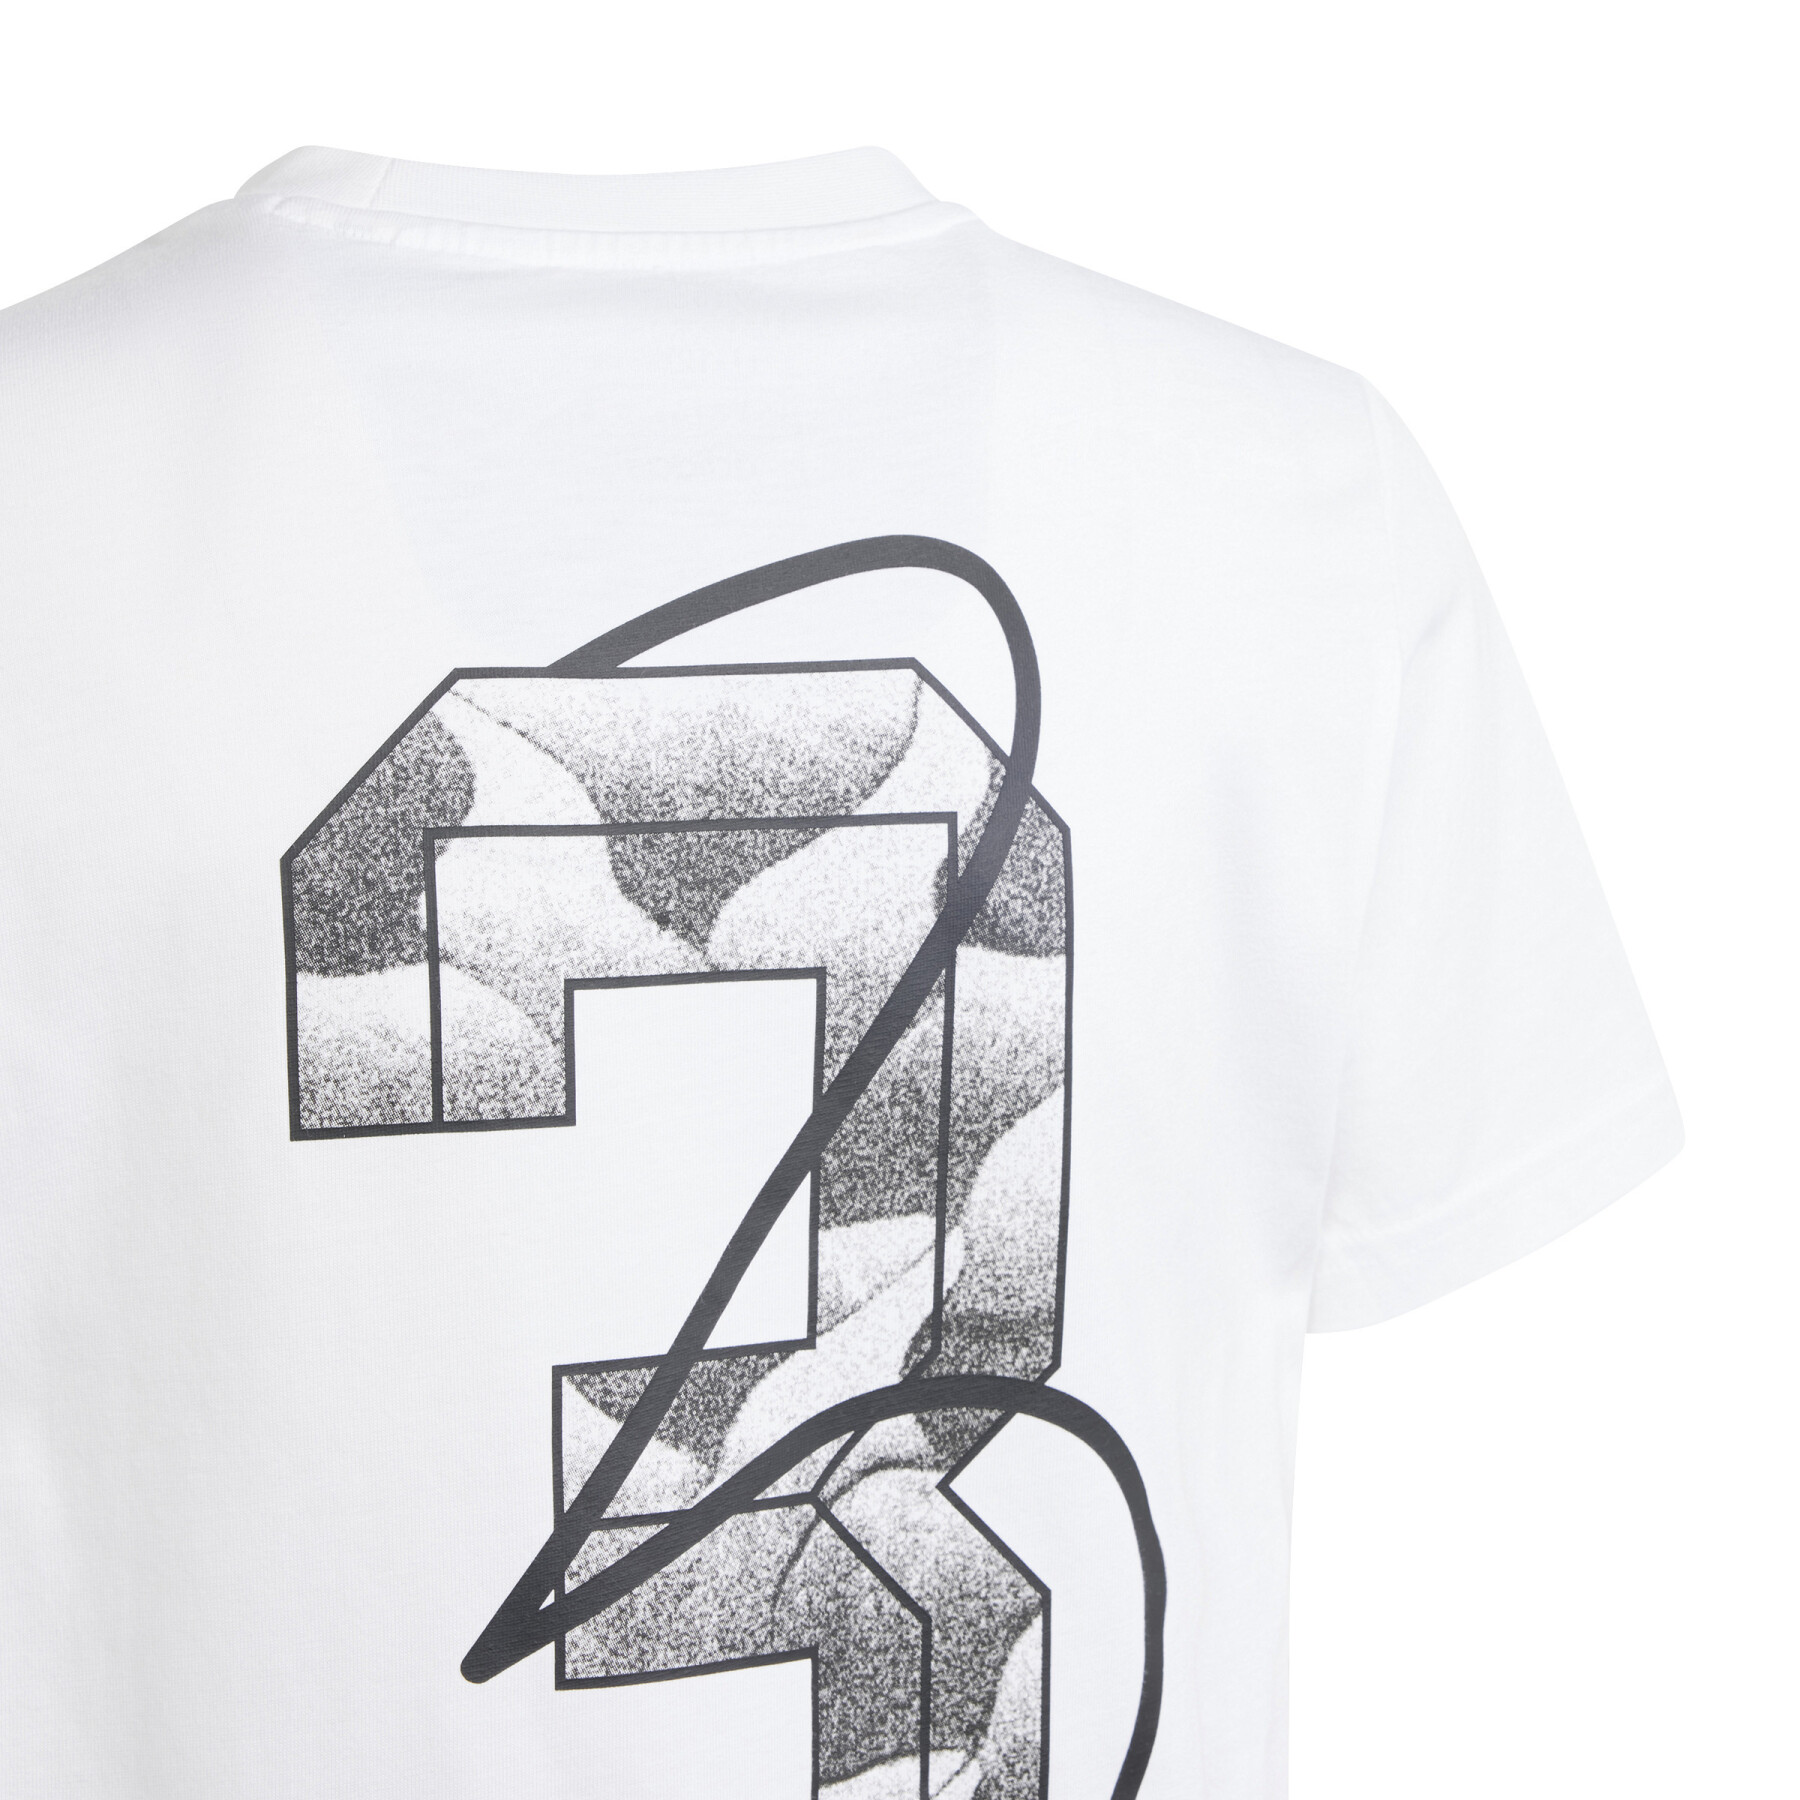 T-shirt per bambini Adidas Graphic House of Tiro